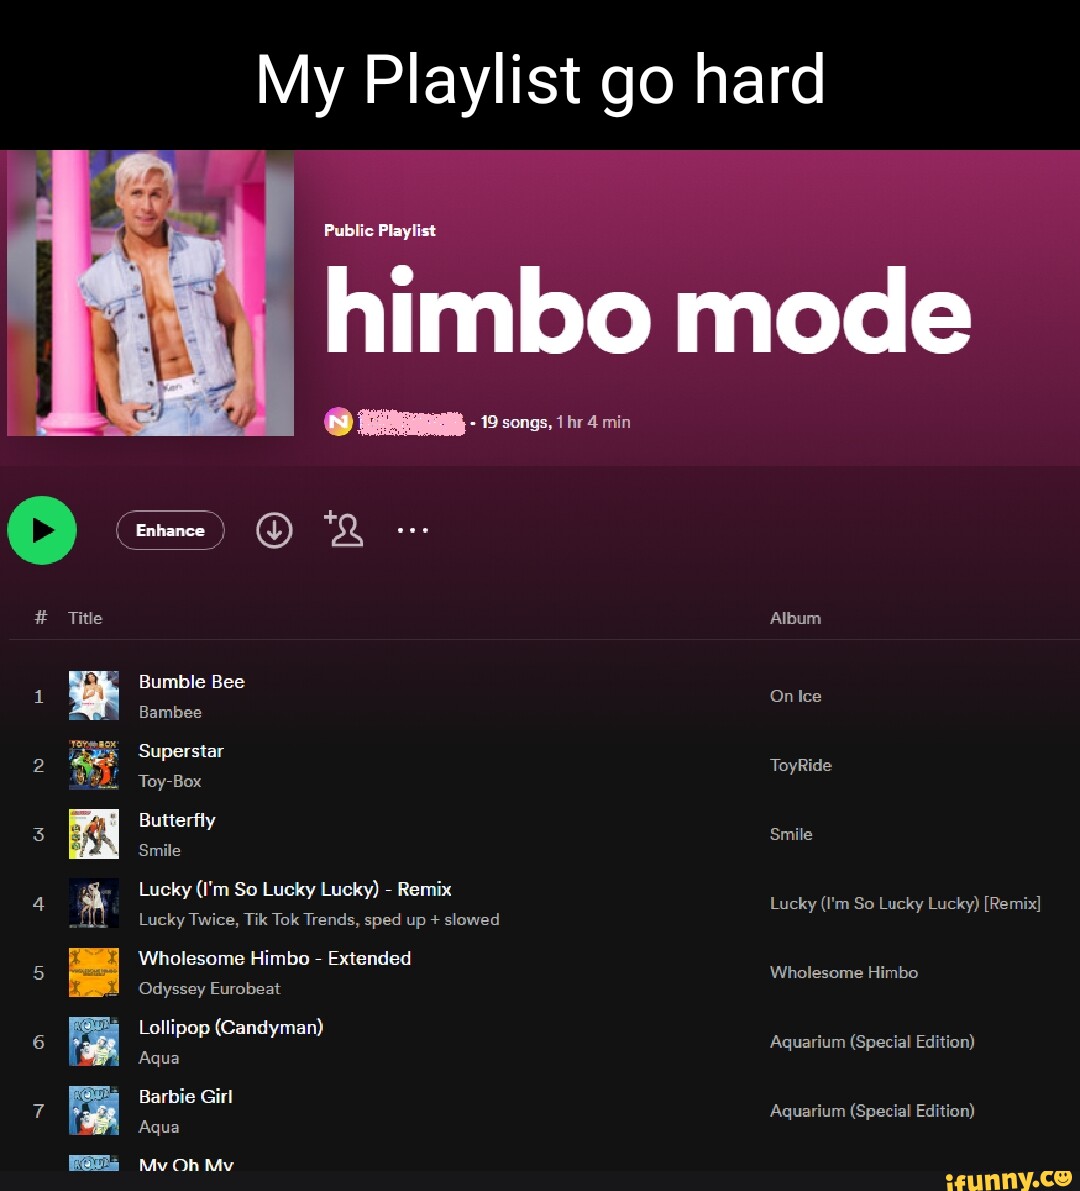 Wholesome Himbo  Odyssey Eurobeat